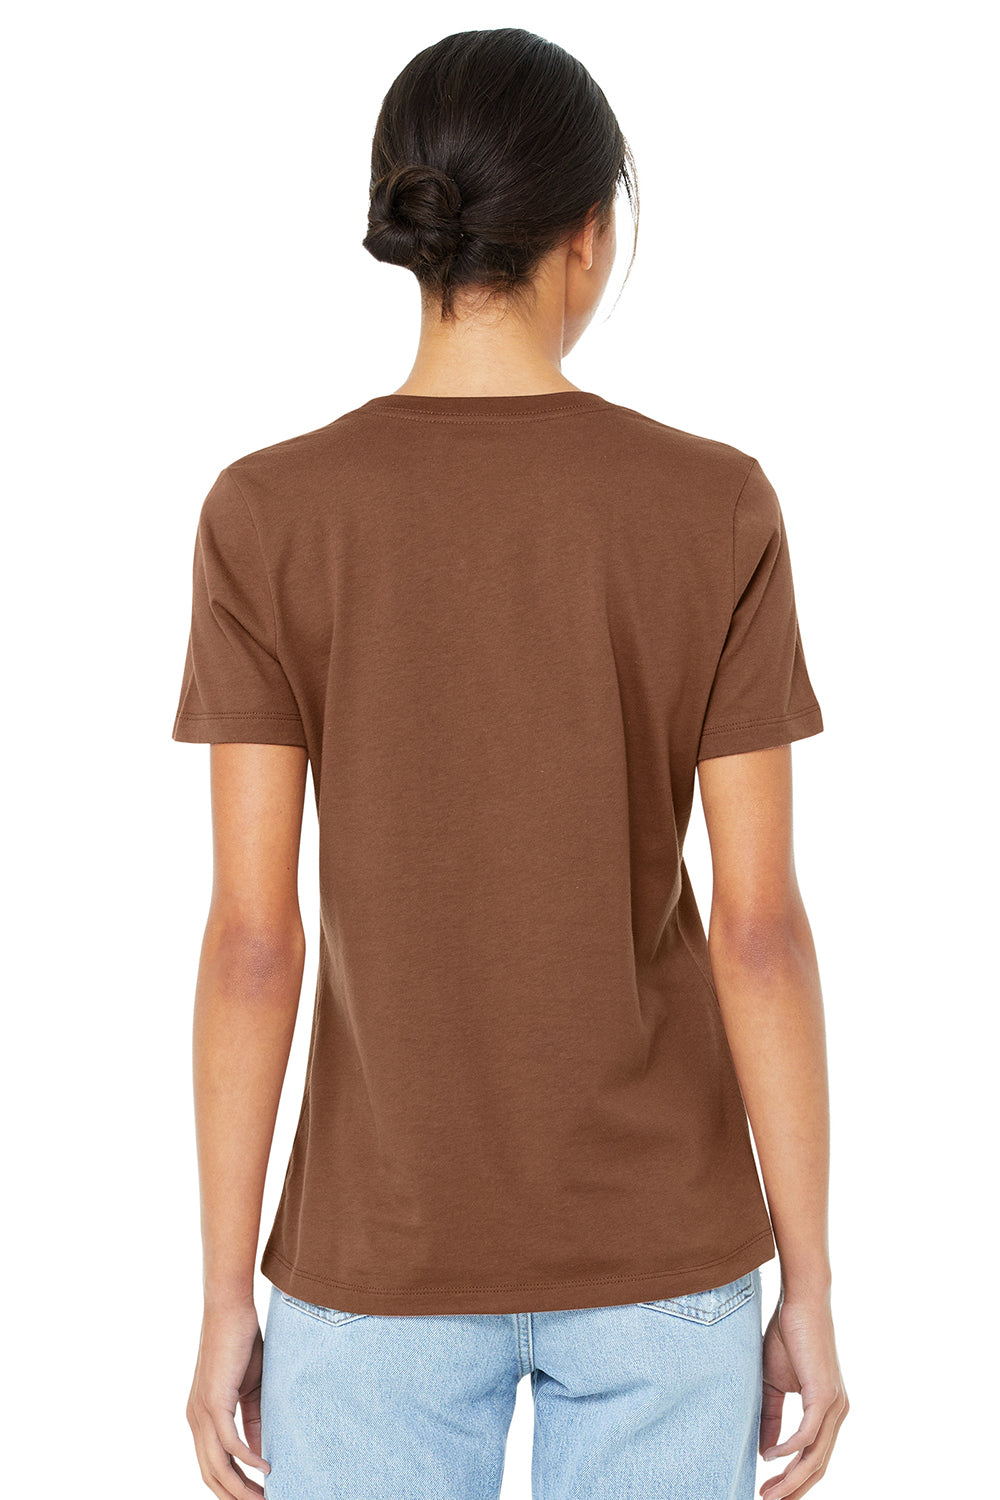 Bella + Canvas BC6400/B6400/6400 Womens Relaxed Jersey Short Sleeve Crewneck T-Shirt Chestnut Brown Model Back